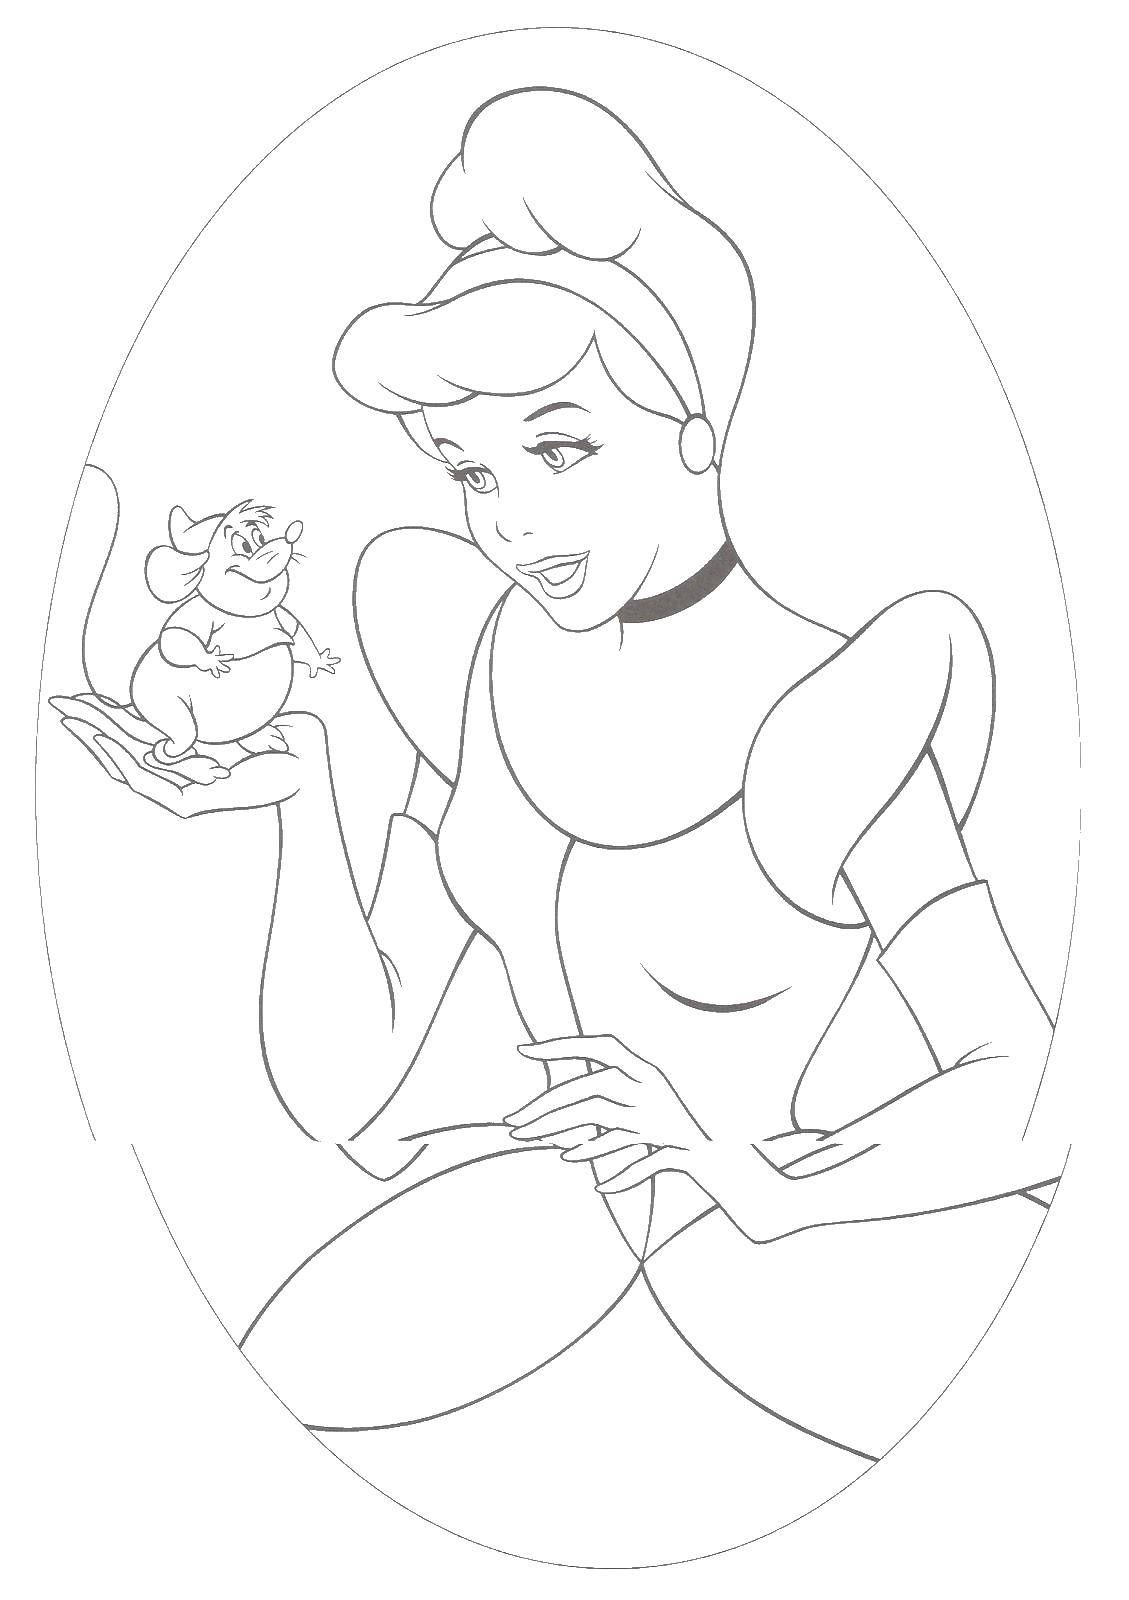 Coloring Cinderella with mouse. Category Princess. Tags:  princesses, cartoons, fairy tales, Cinderella.